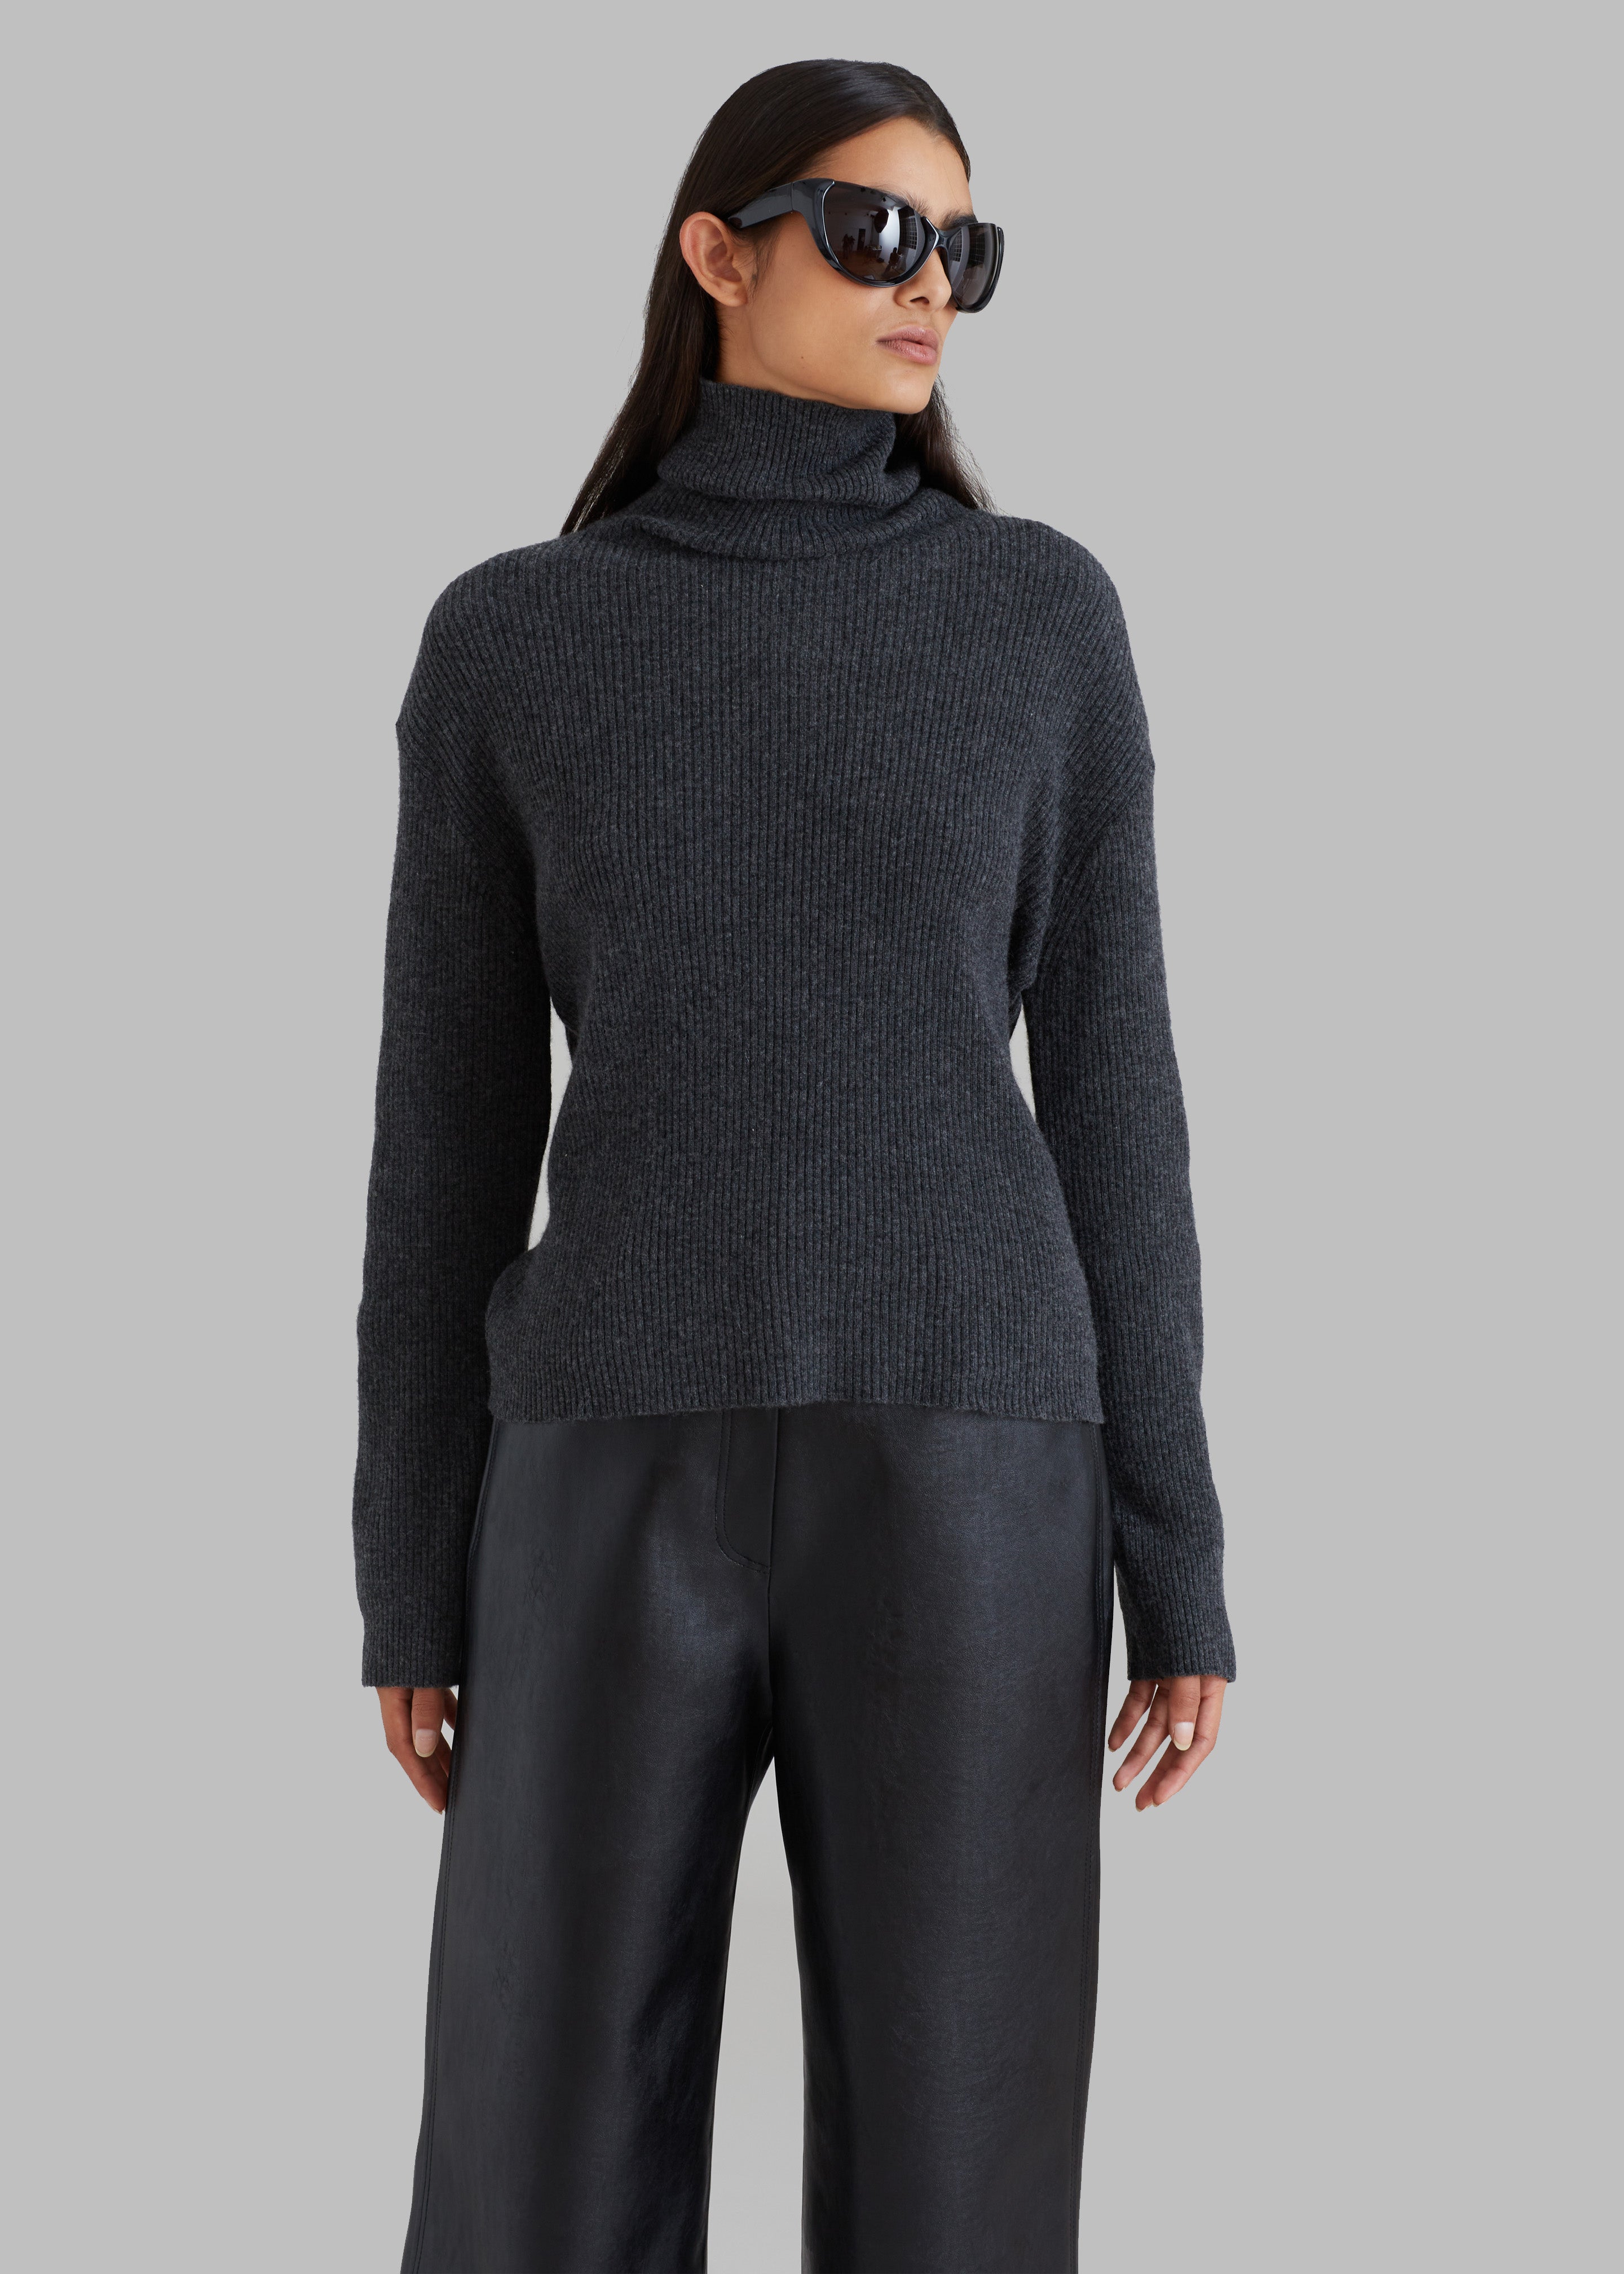 Jensen Turtleneck Sweater - Charcoal - 1